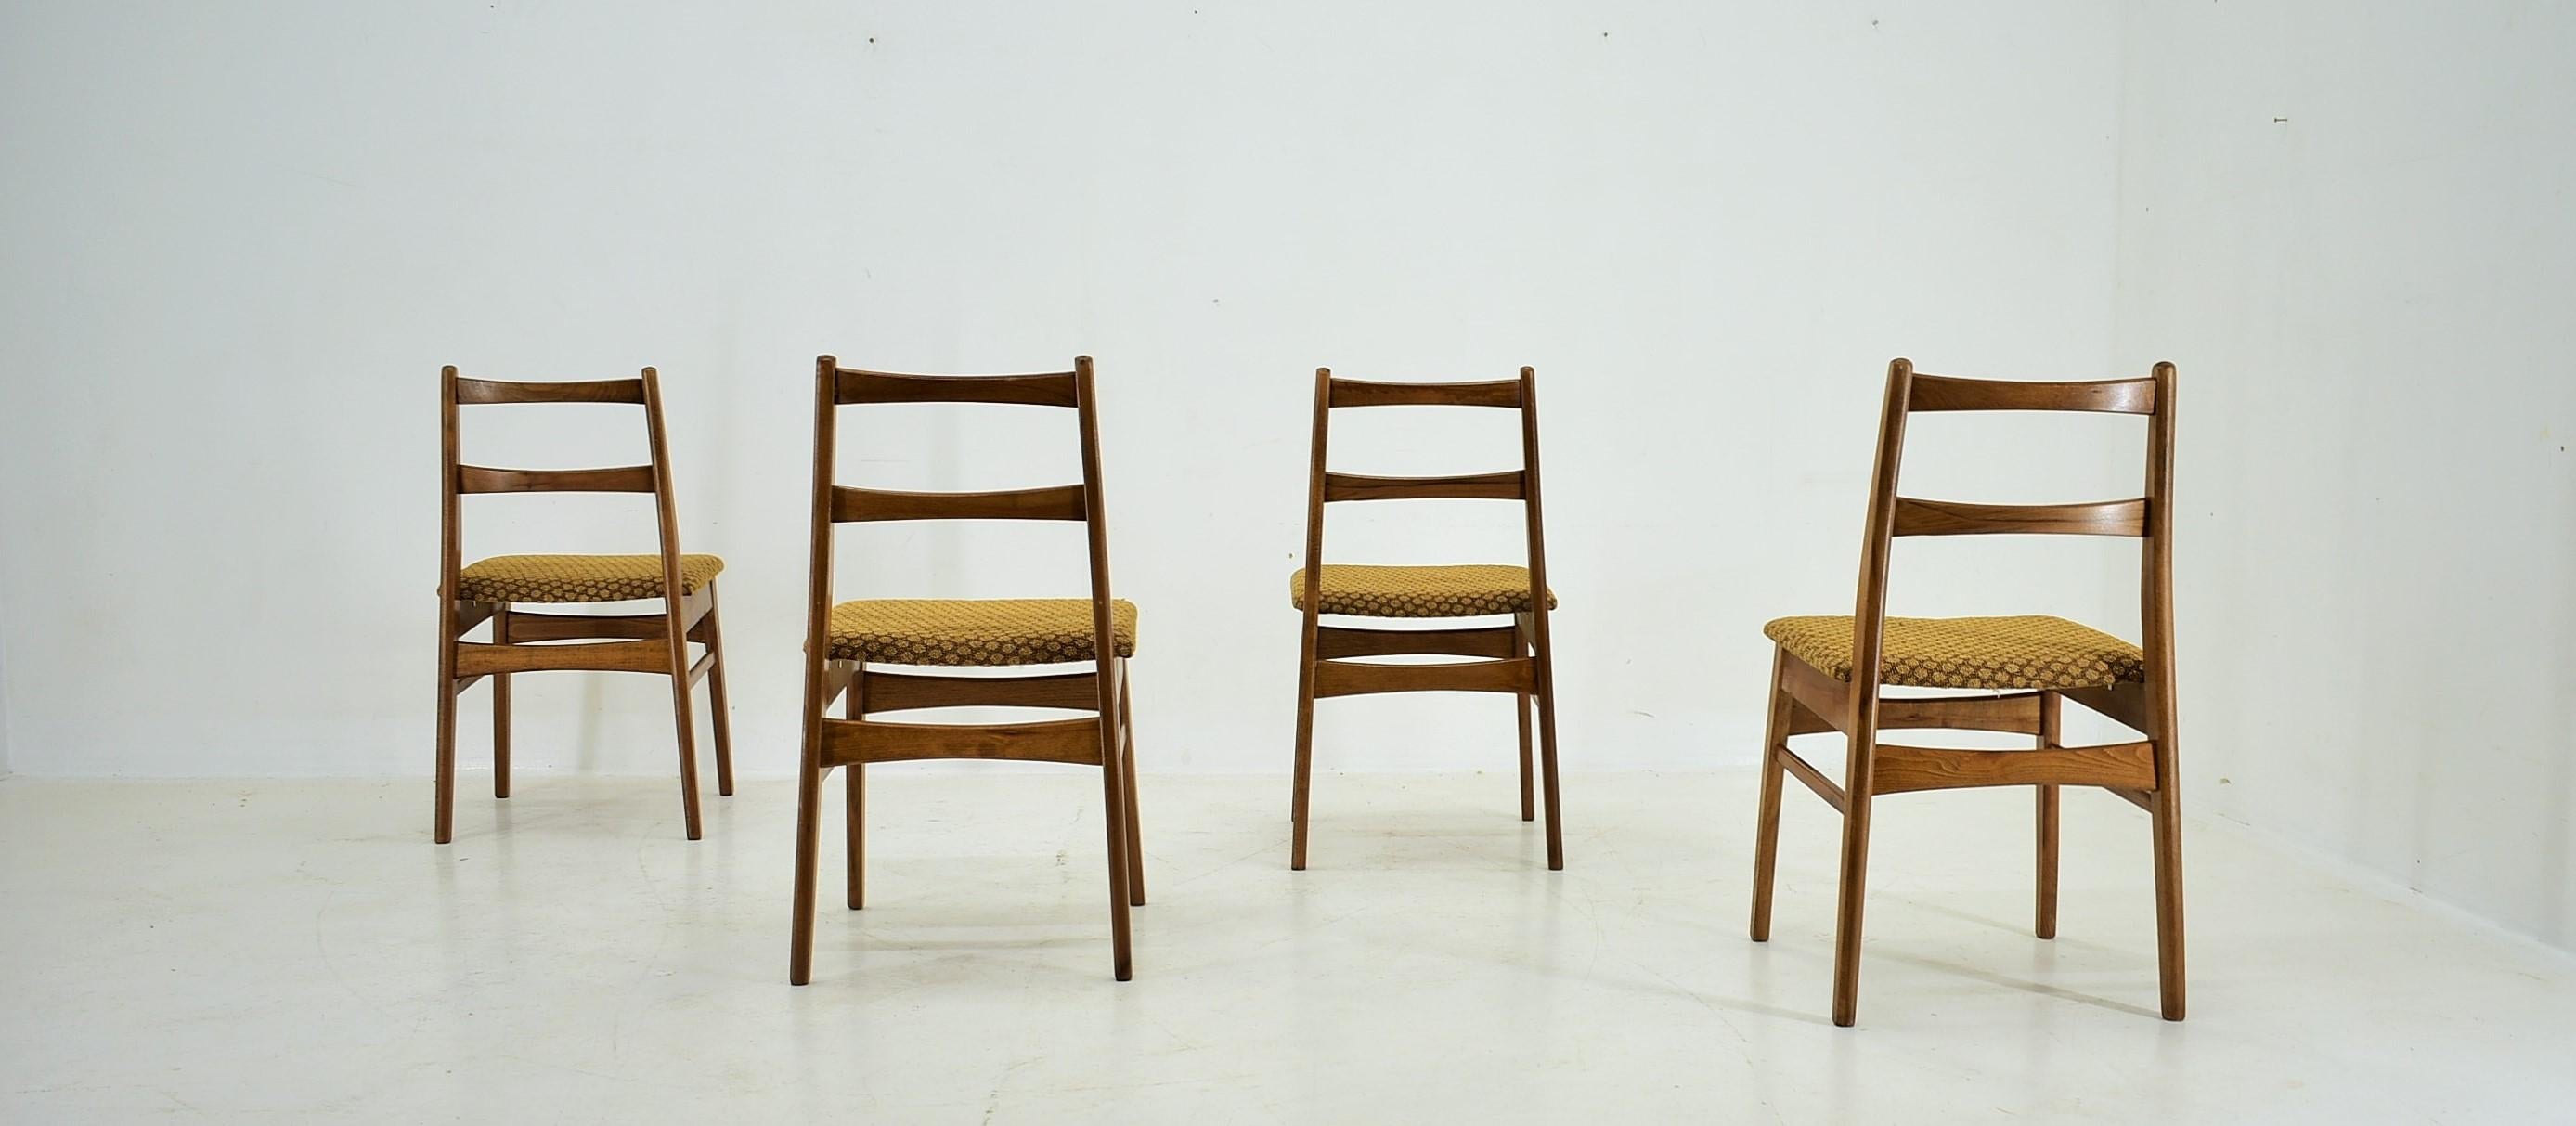 1960s Beech Dining Chairs, Czechoslovakia For Sale 2